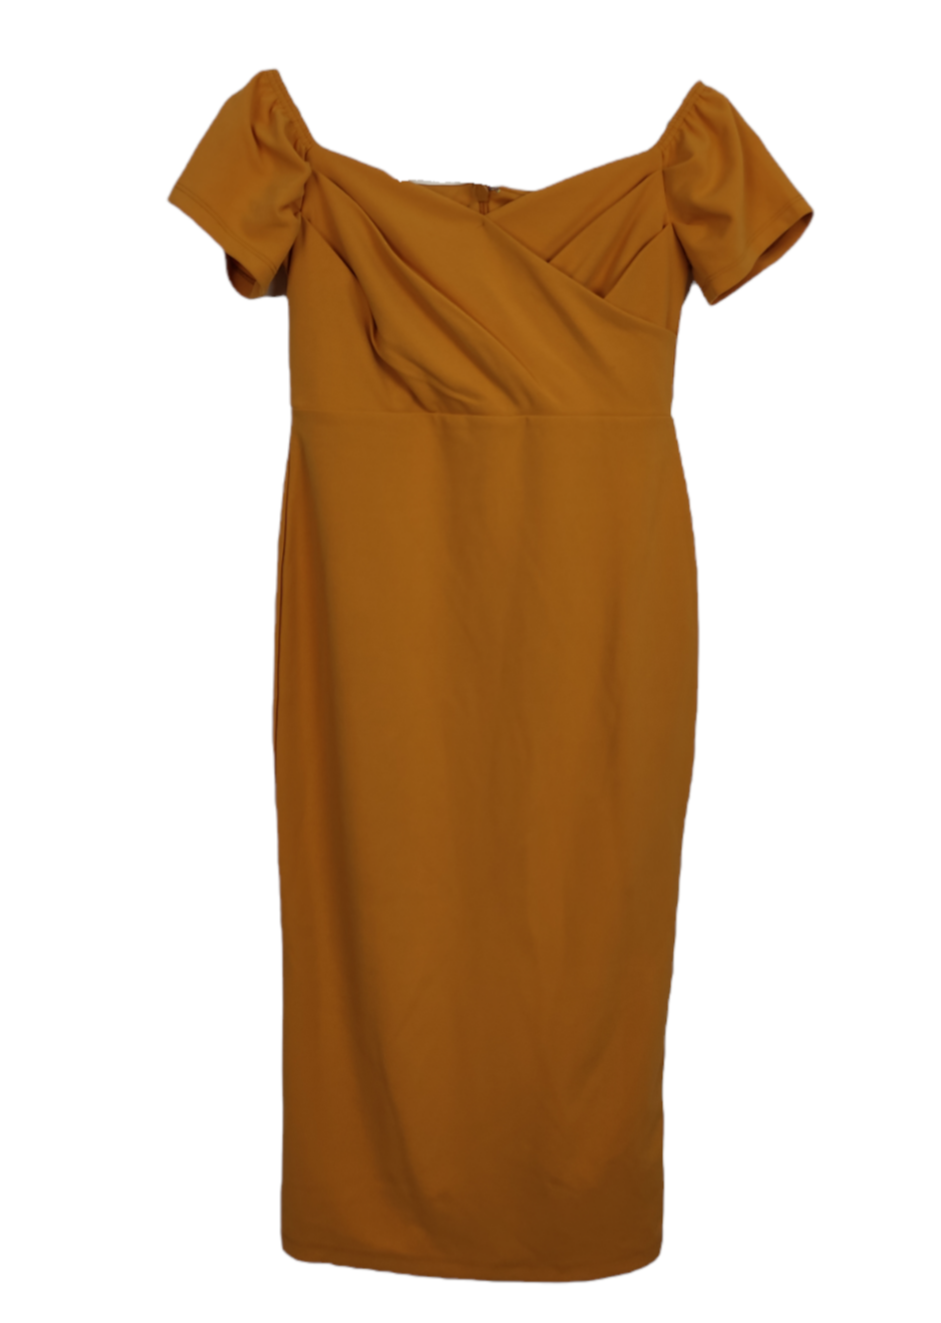 Stock, Ελαστικό Φόρεμα TOPSHOP σε Κίτρινο χρώμα (Small)